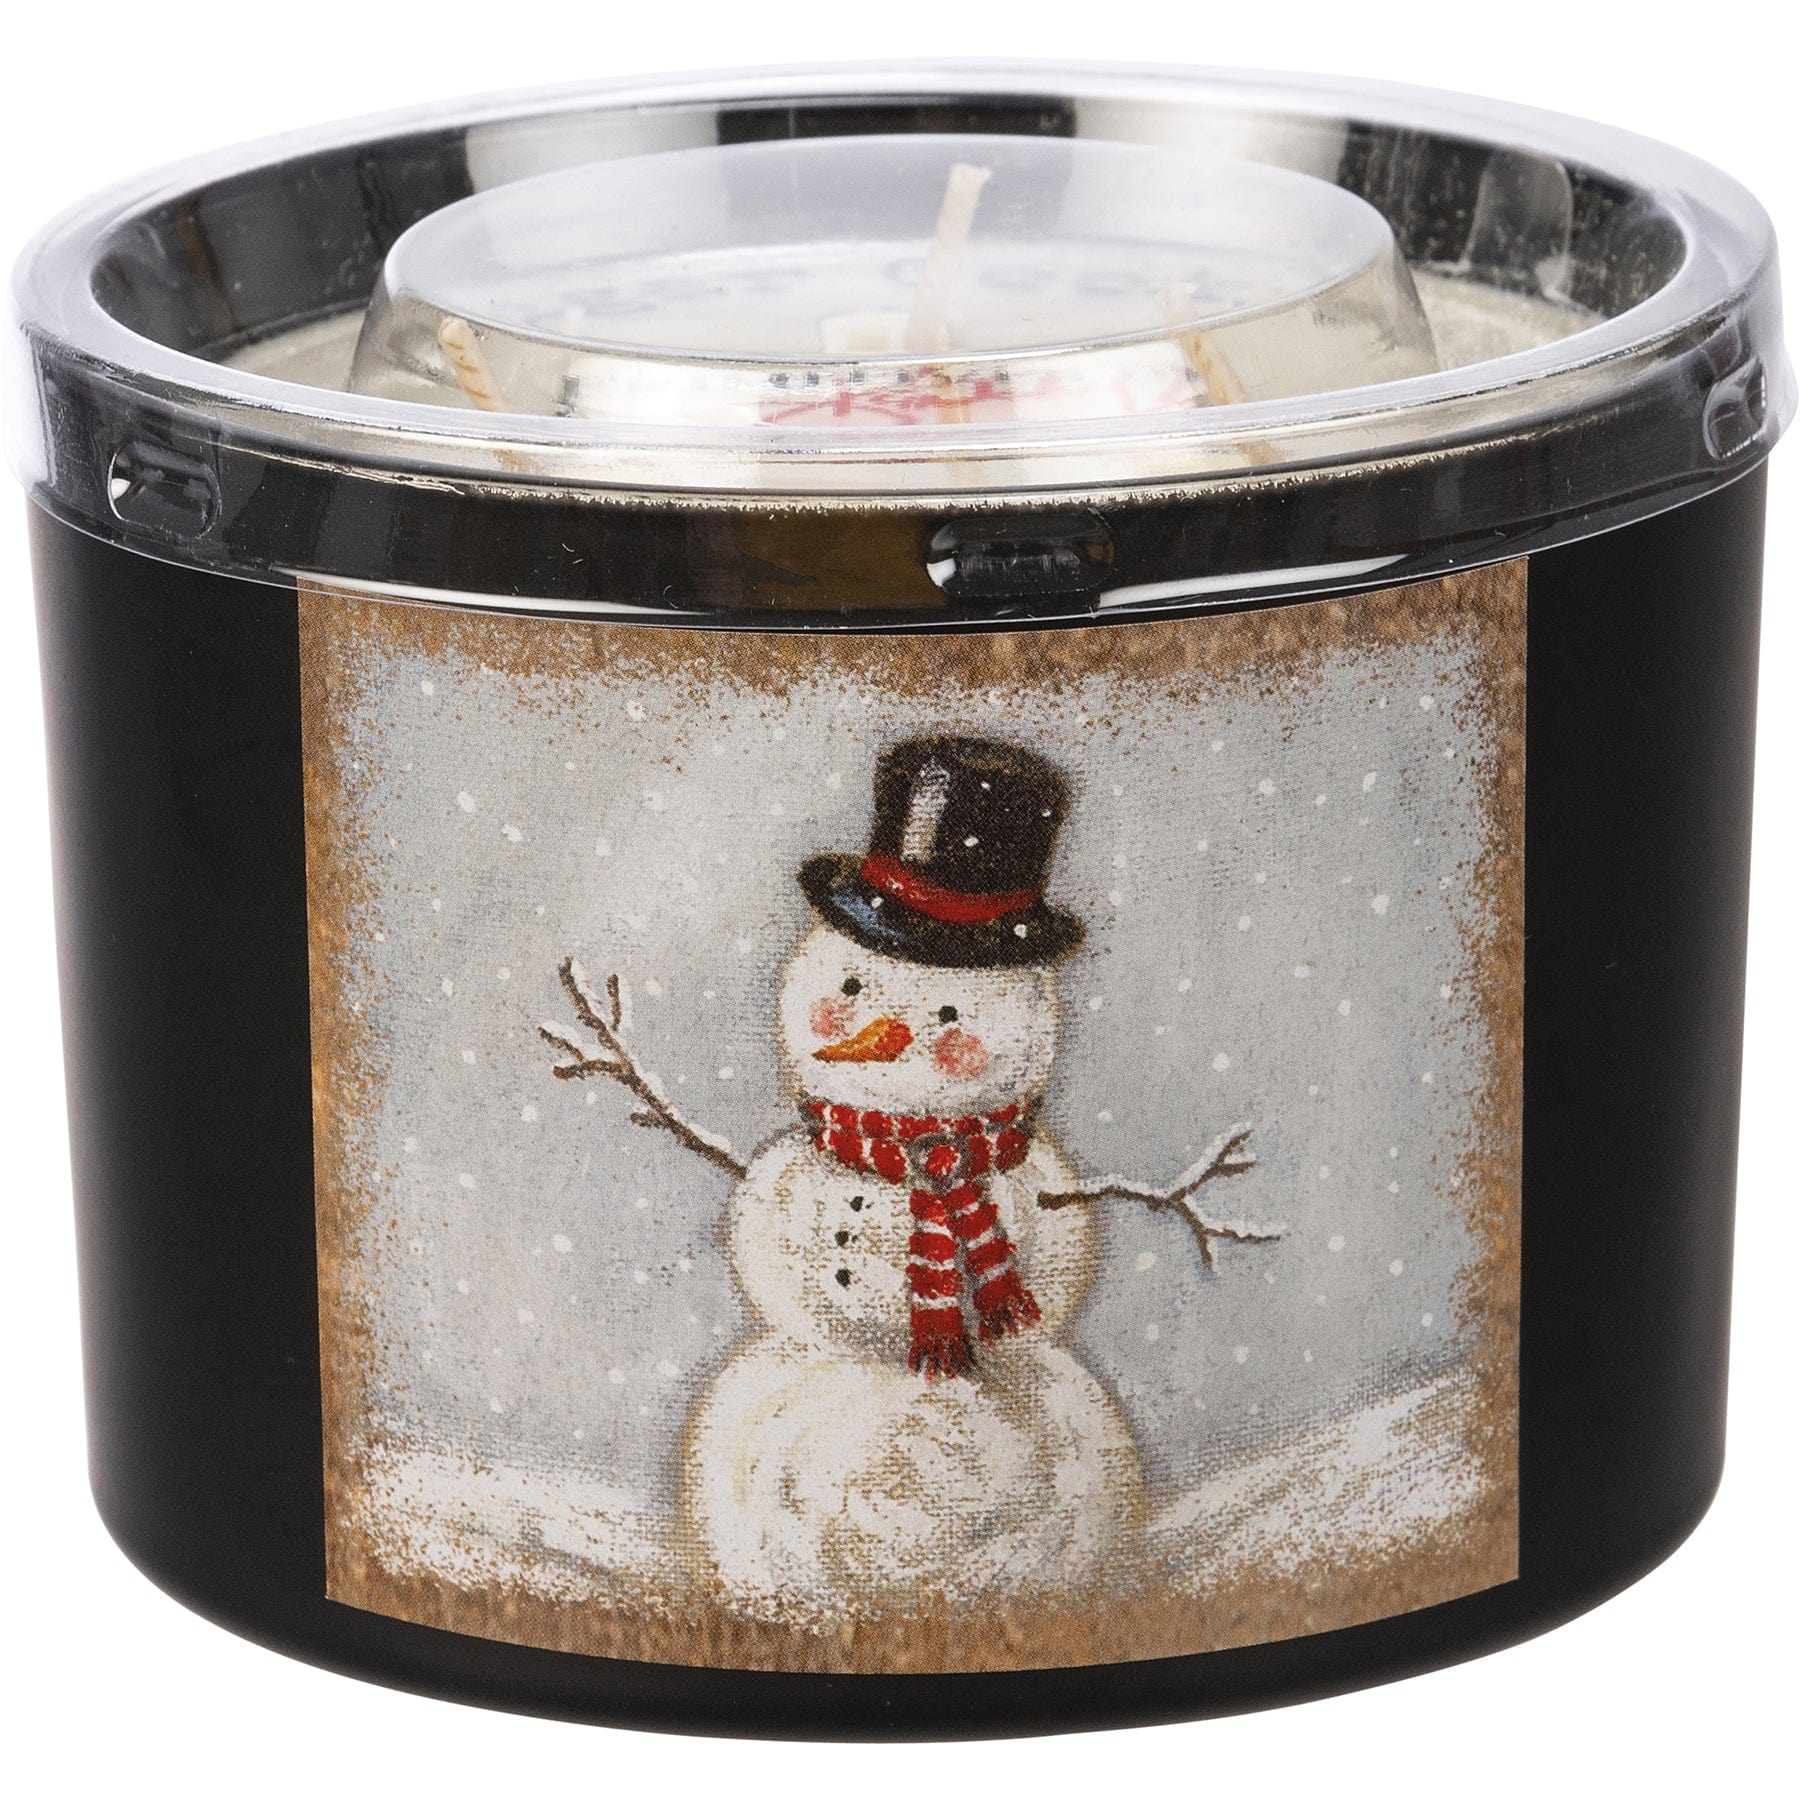 Candles Jar Candle - Snowman - Sugar Cookie PBK-110870